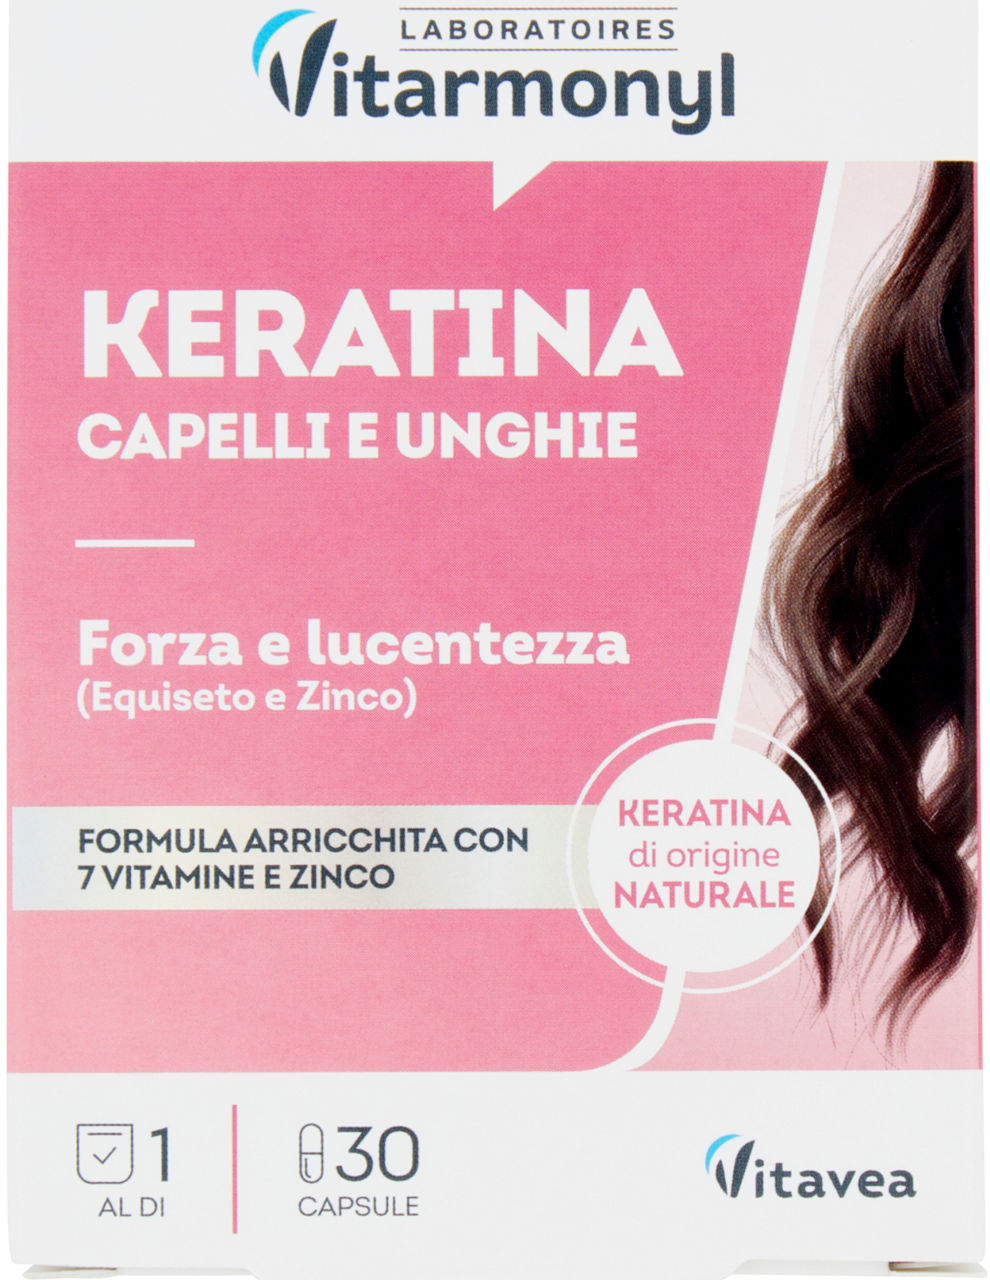 Optima beauty capelli & unghie keratina vitarmonyl  g 12,10